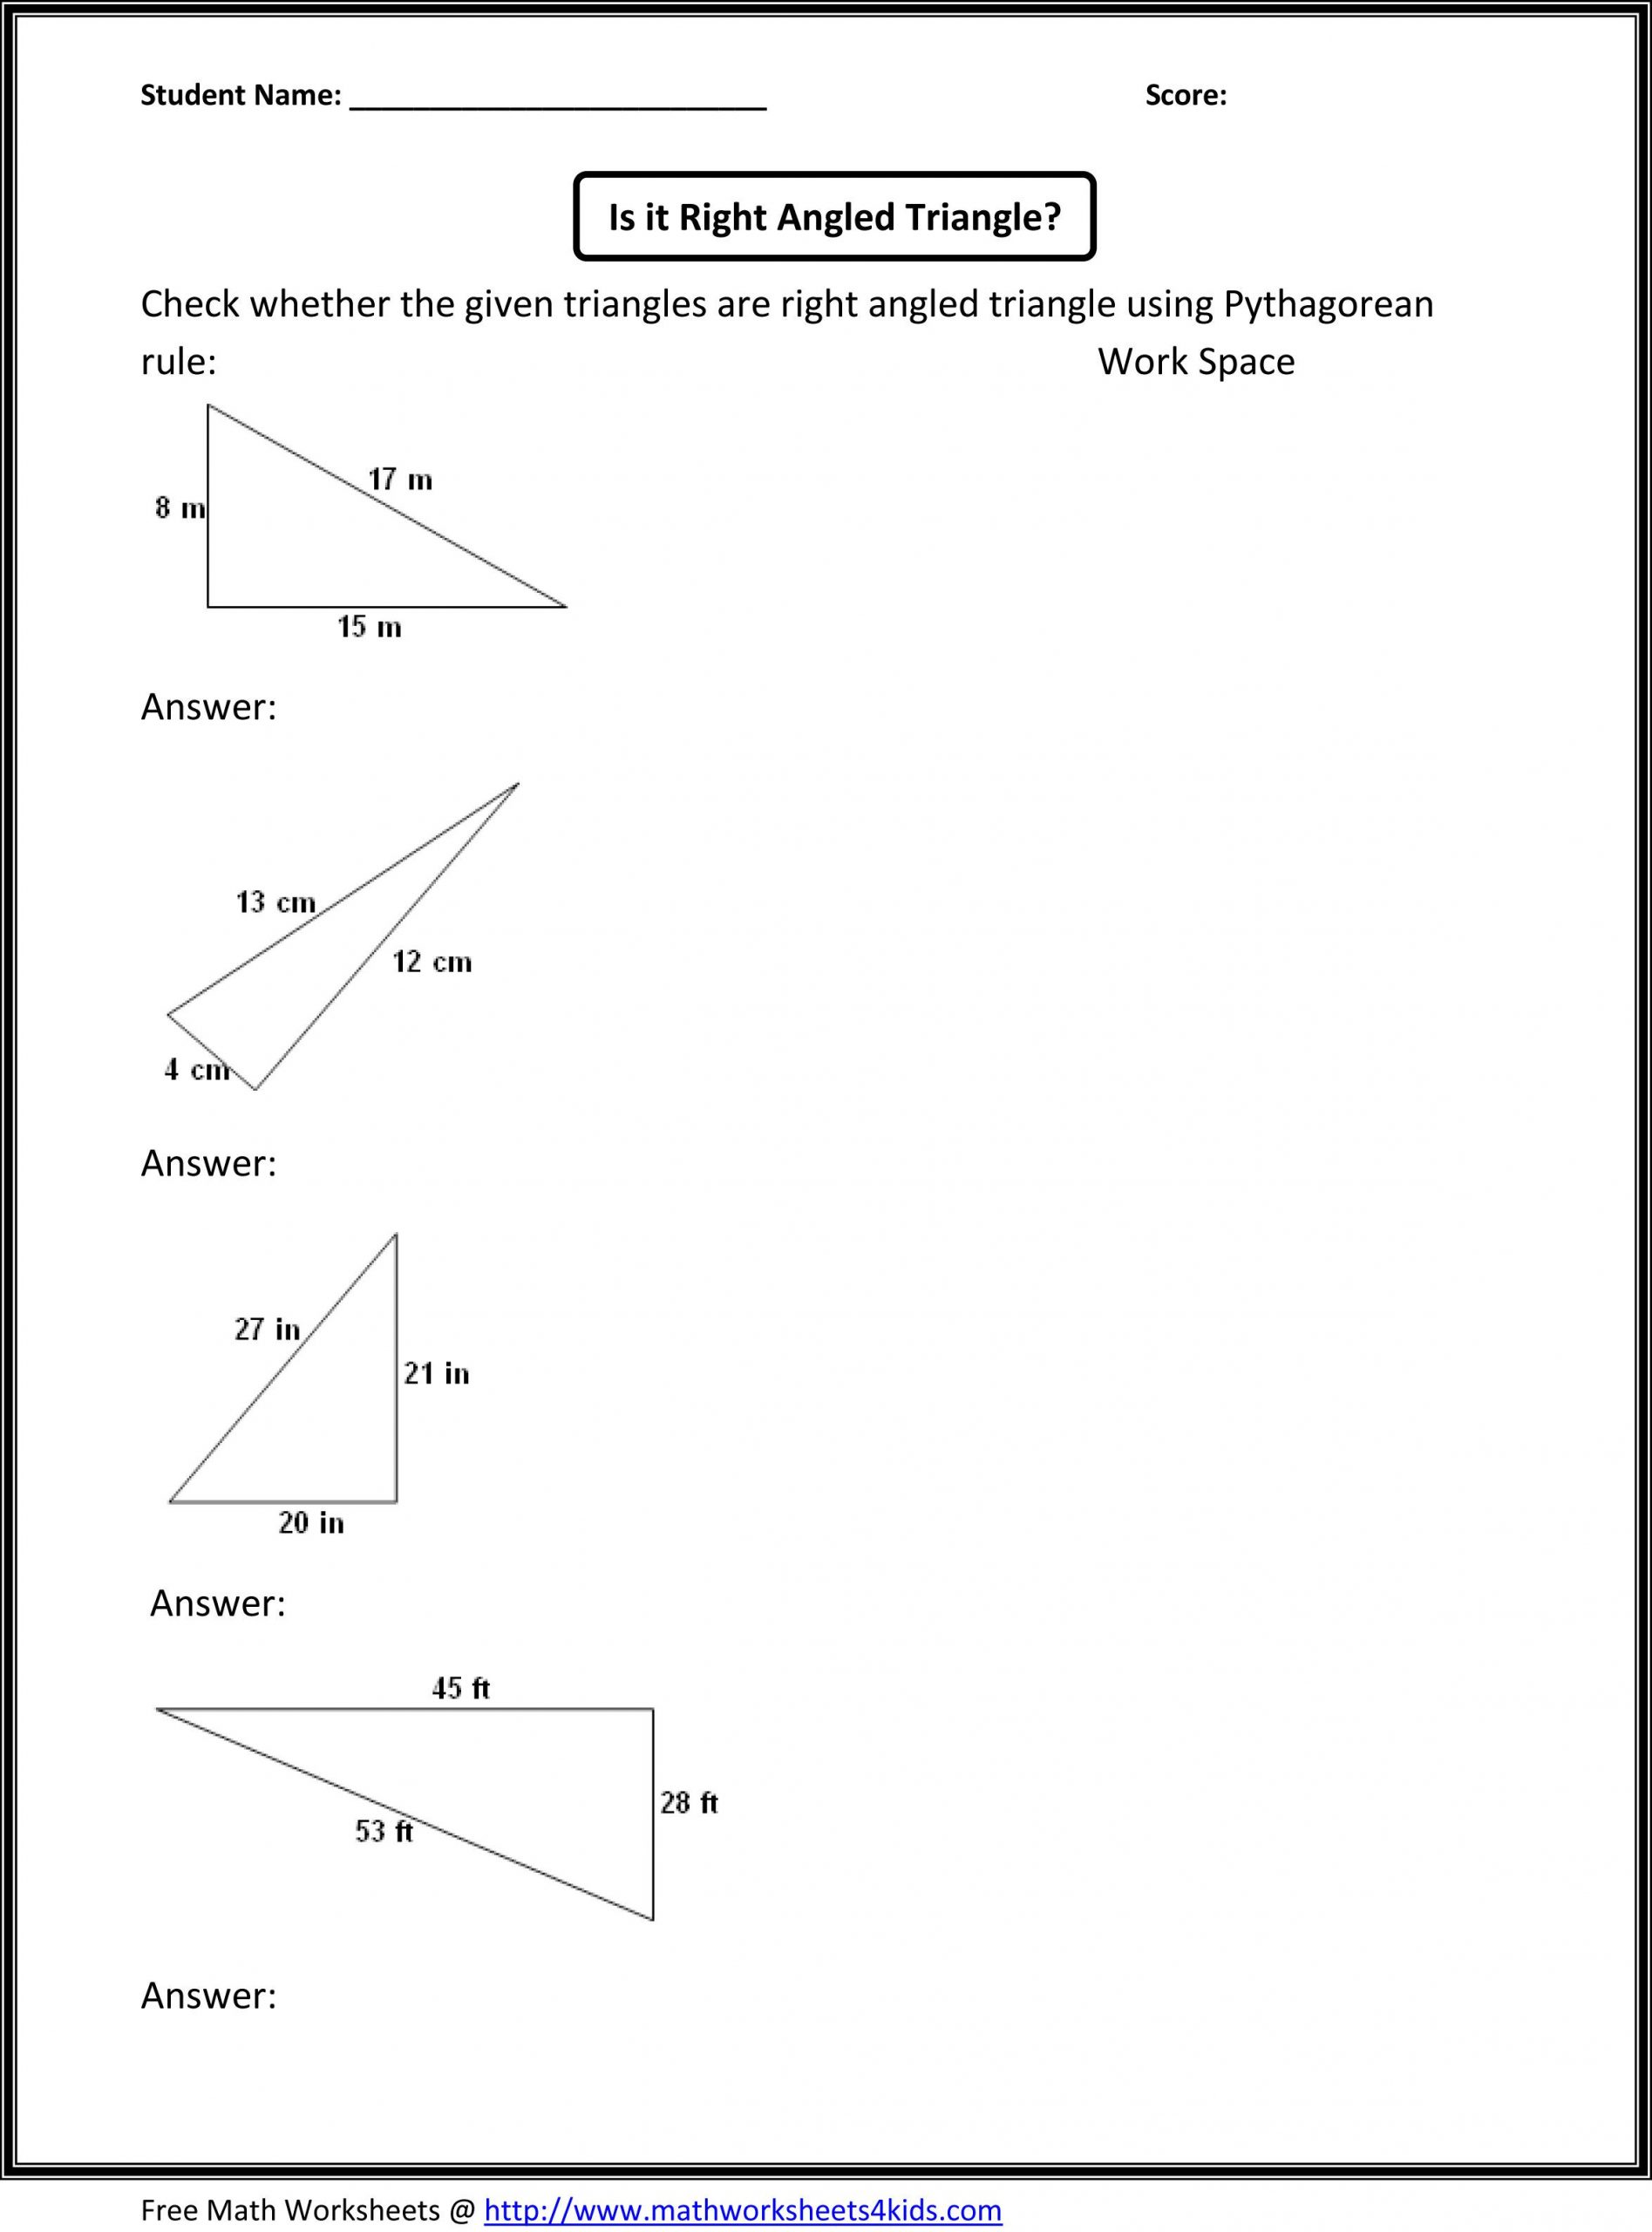 Pythagoras theorem Worksheet with Answers Pythagorean theorem Worksheet